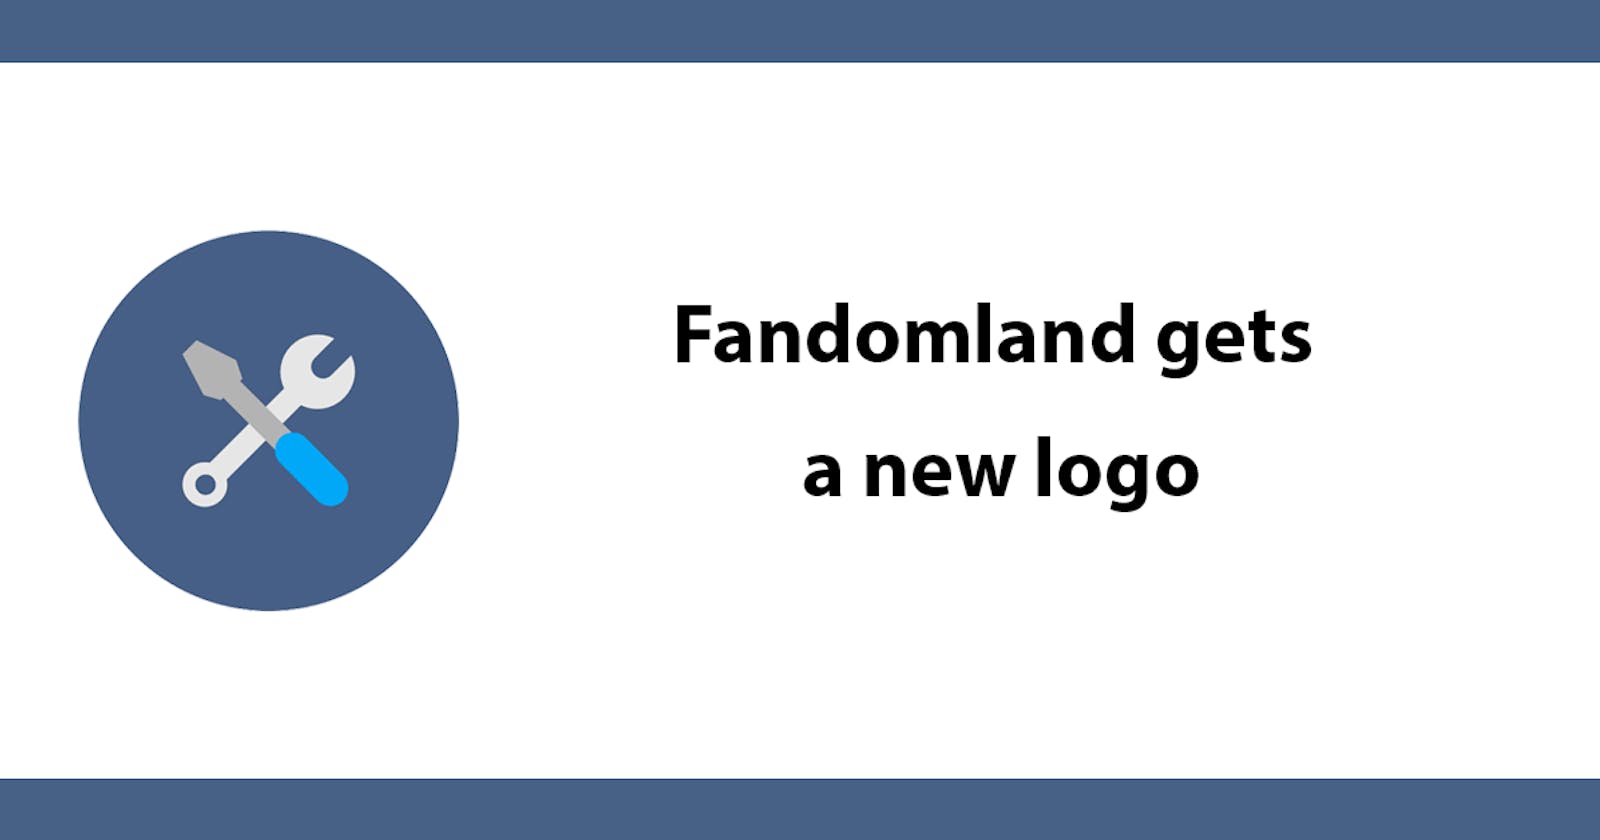 Fandomland gets a new logo